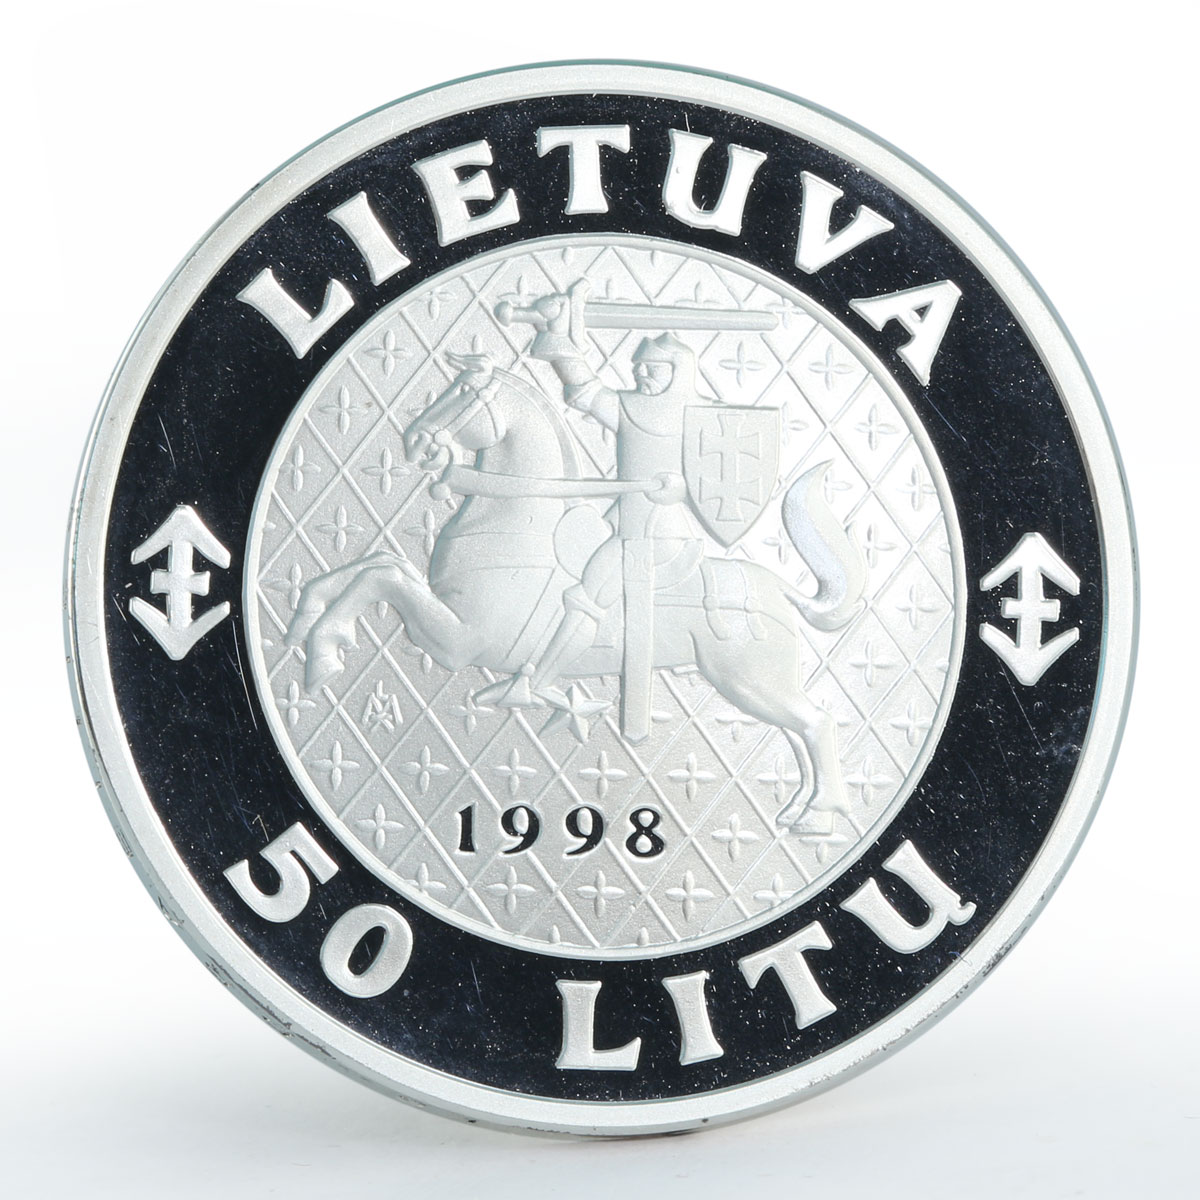 Lithuania 50 litu The Grand Duke Algirdas silver proof coin 1998